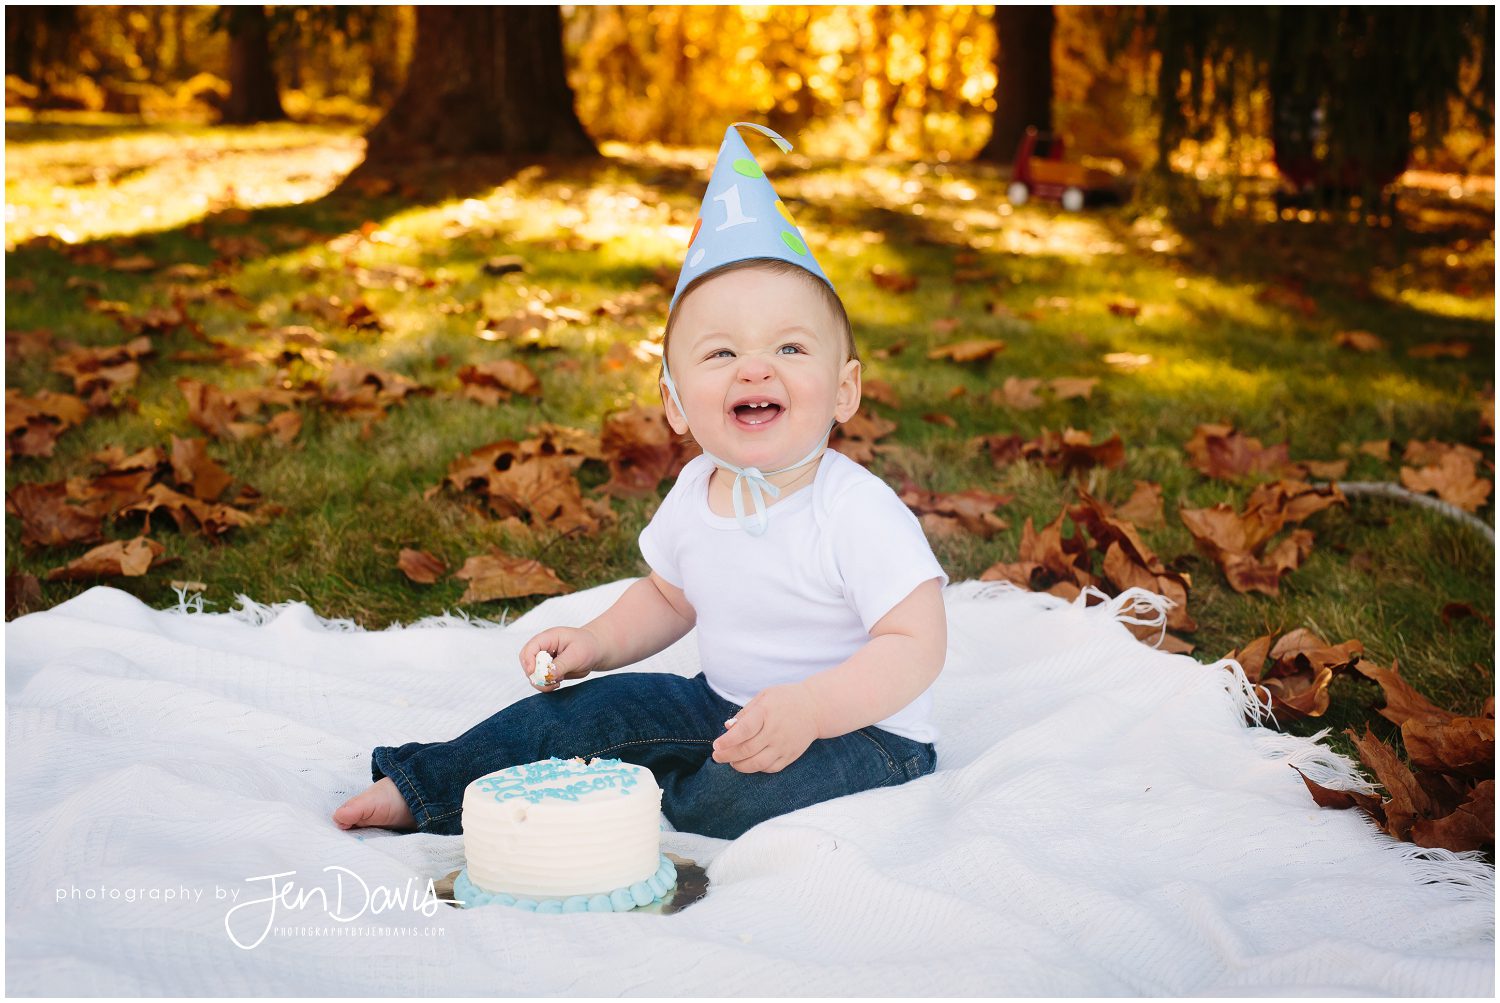 1 year old boy eats cake